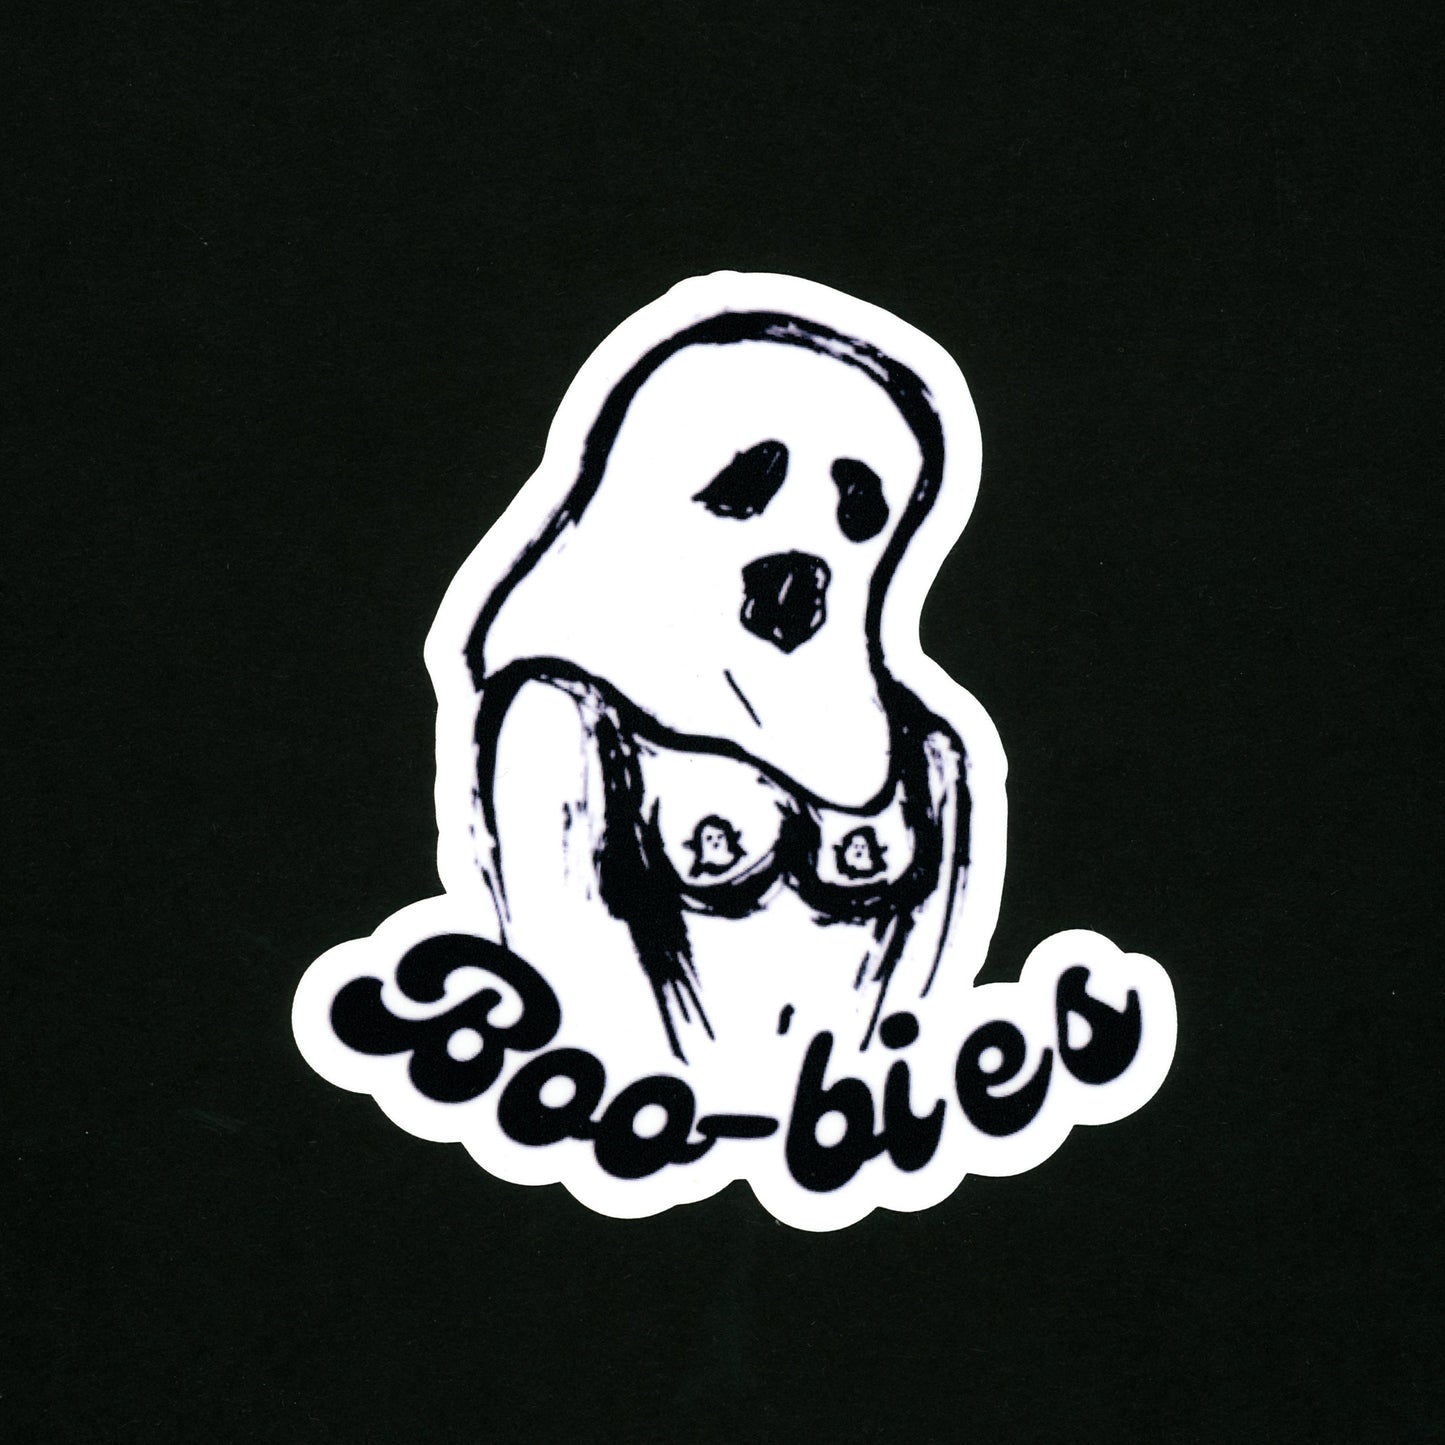 Boo-bies Sticker